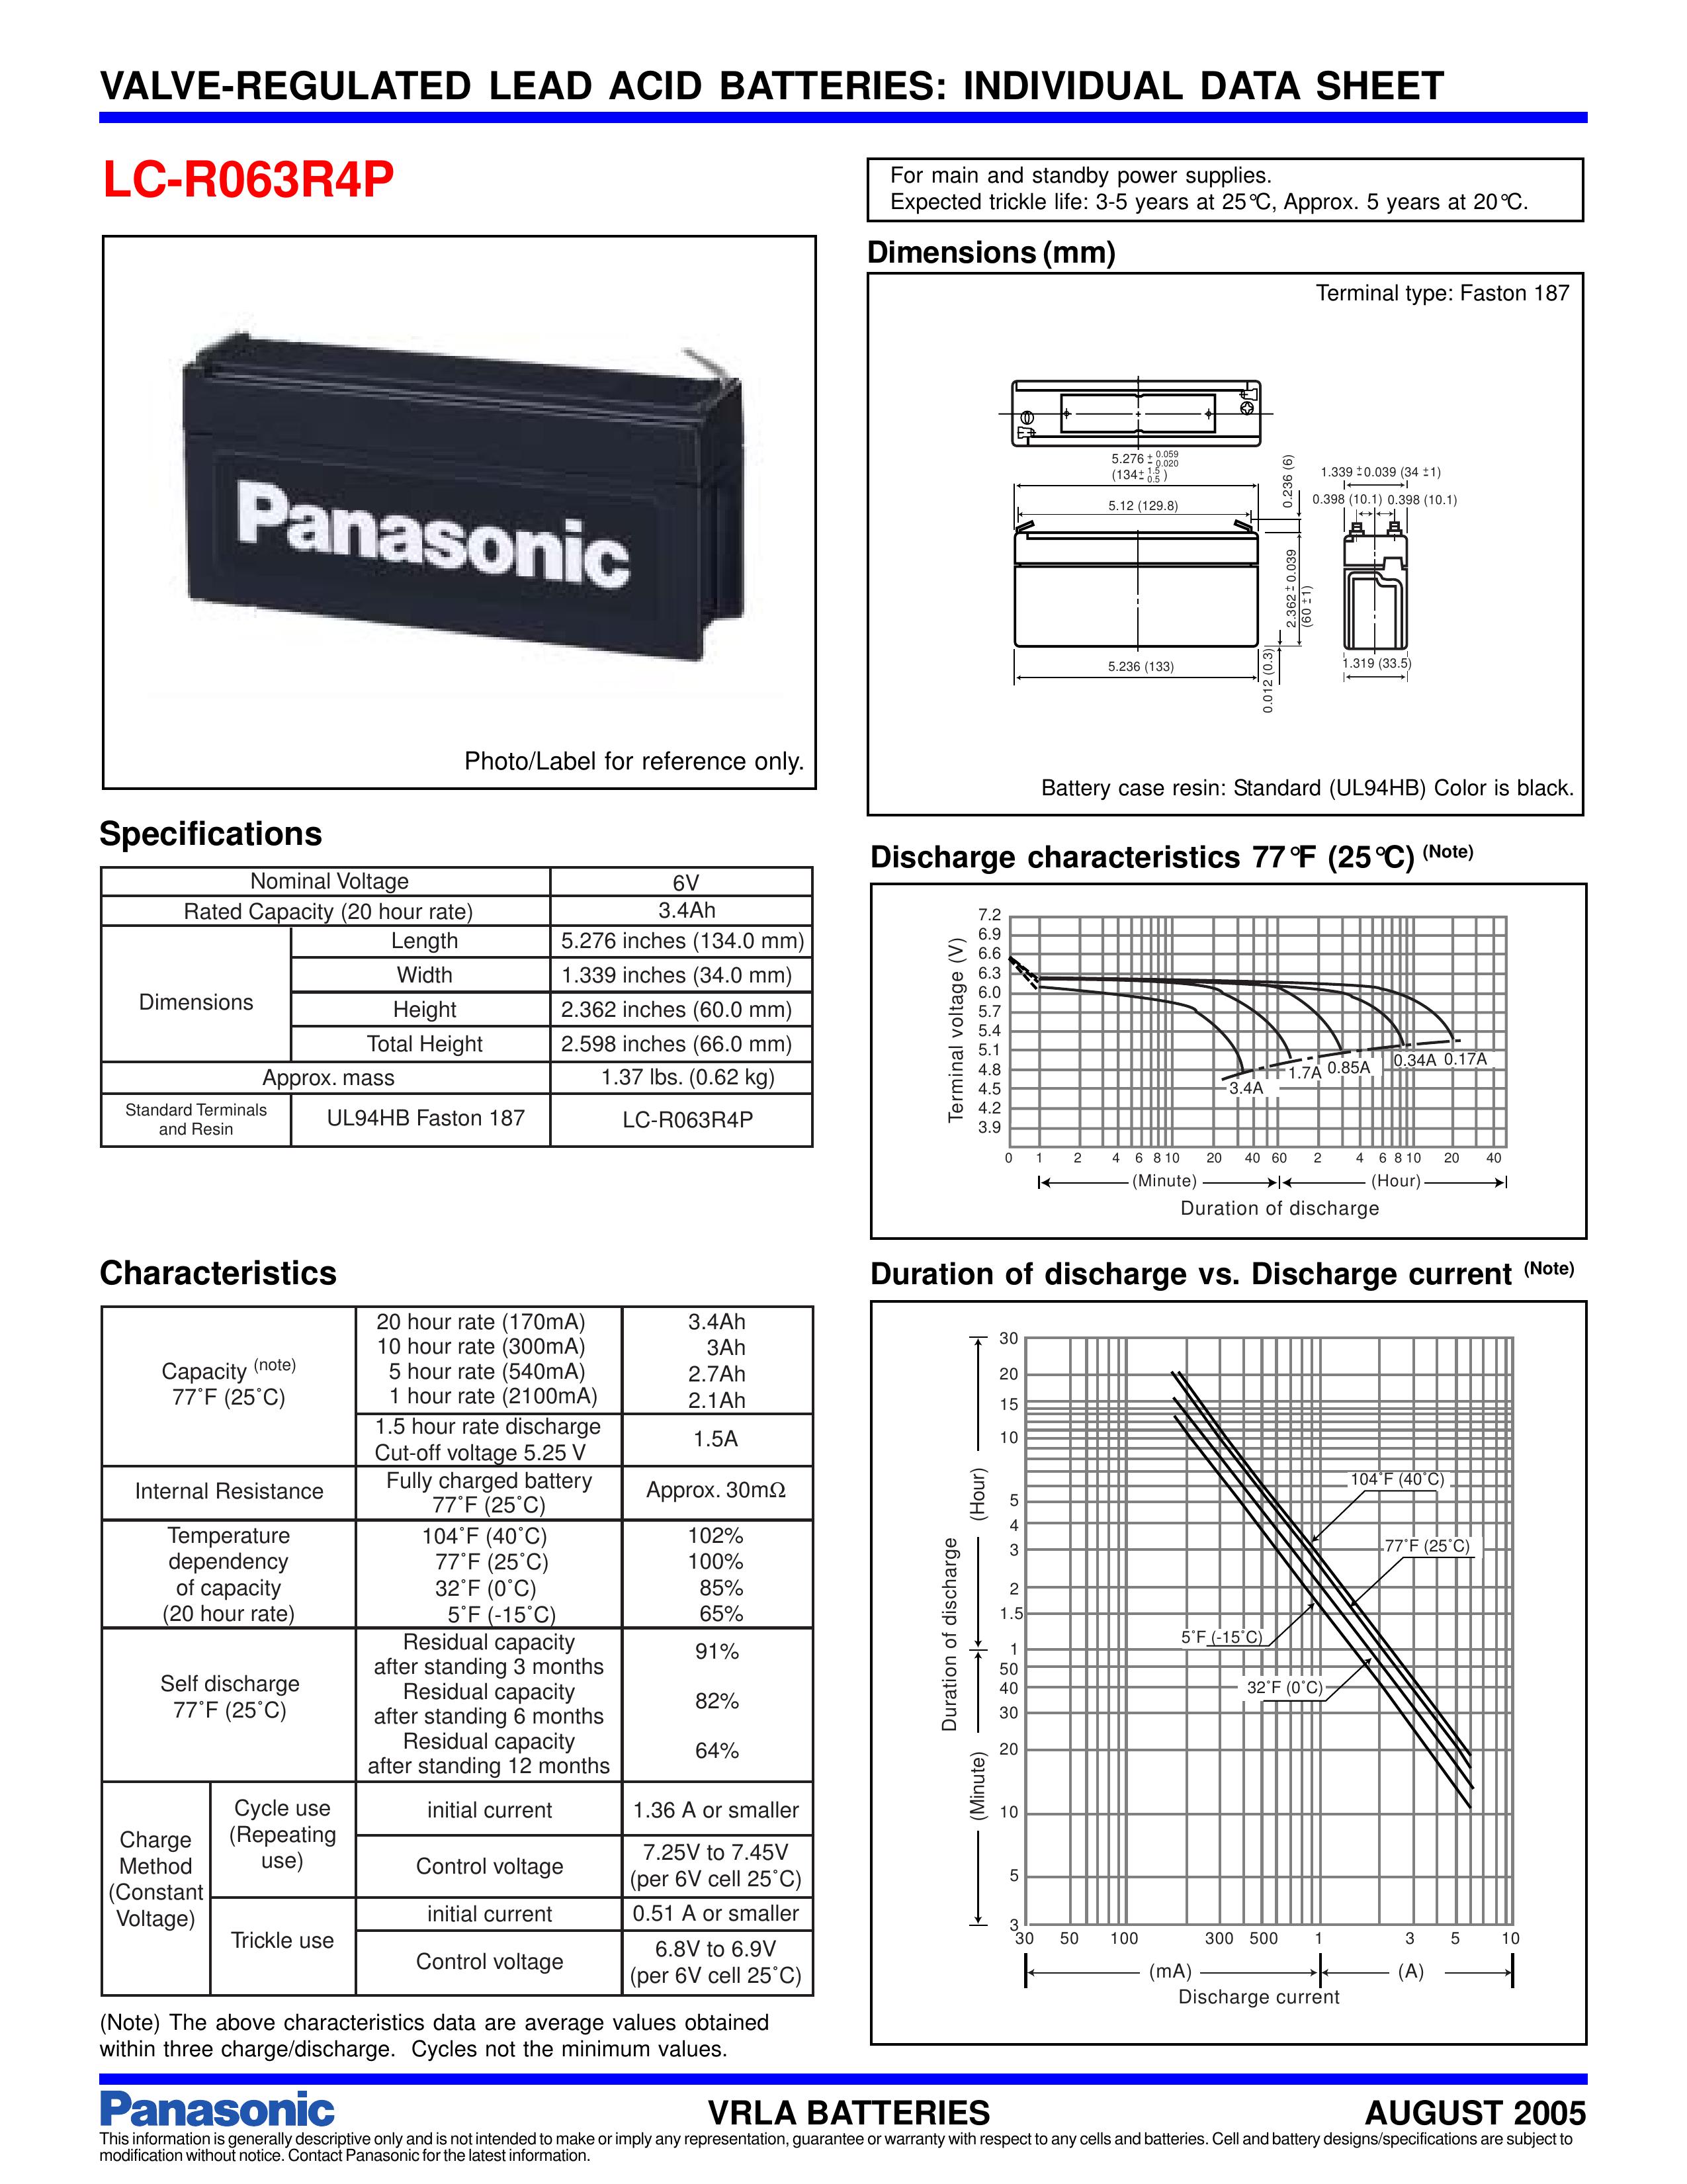 Panasonic LC-R063R4P Portable Generator User Manual